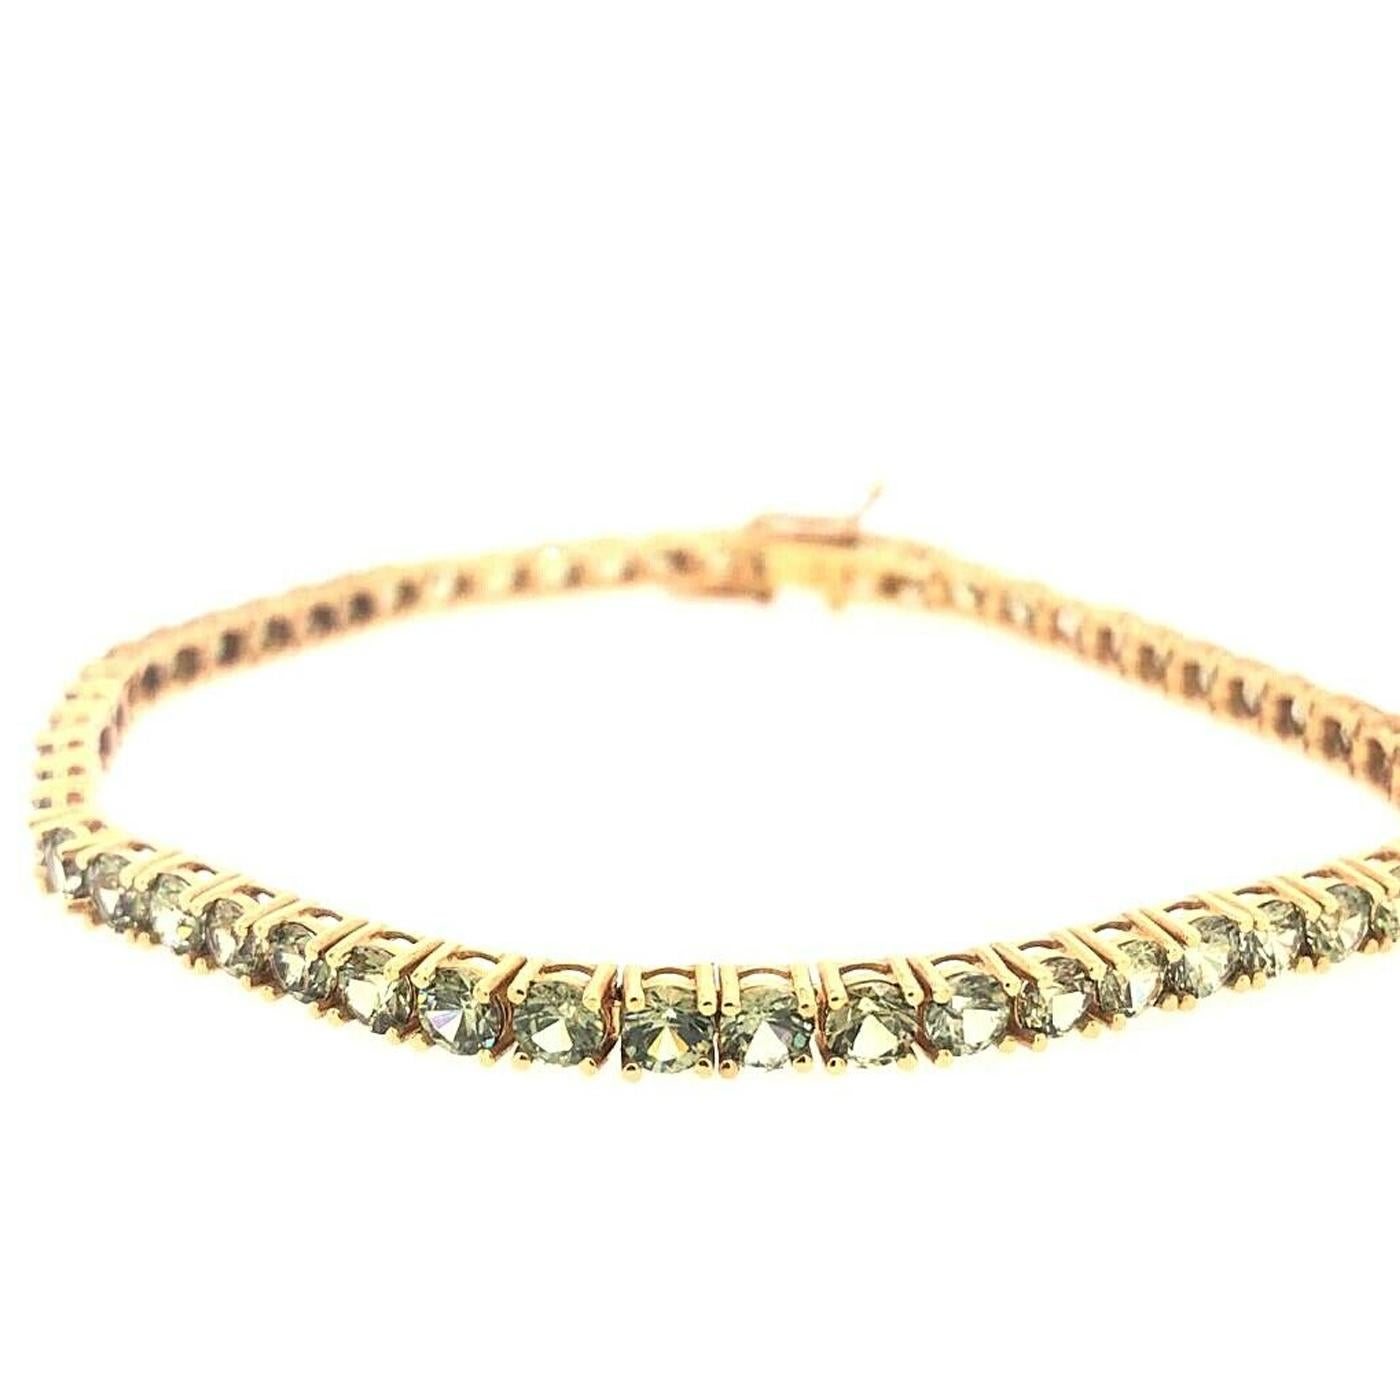 5.80ct 18ct rose gold tennis bracelet guaranteed g/h colour si purity natural diamonds